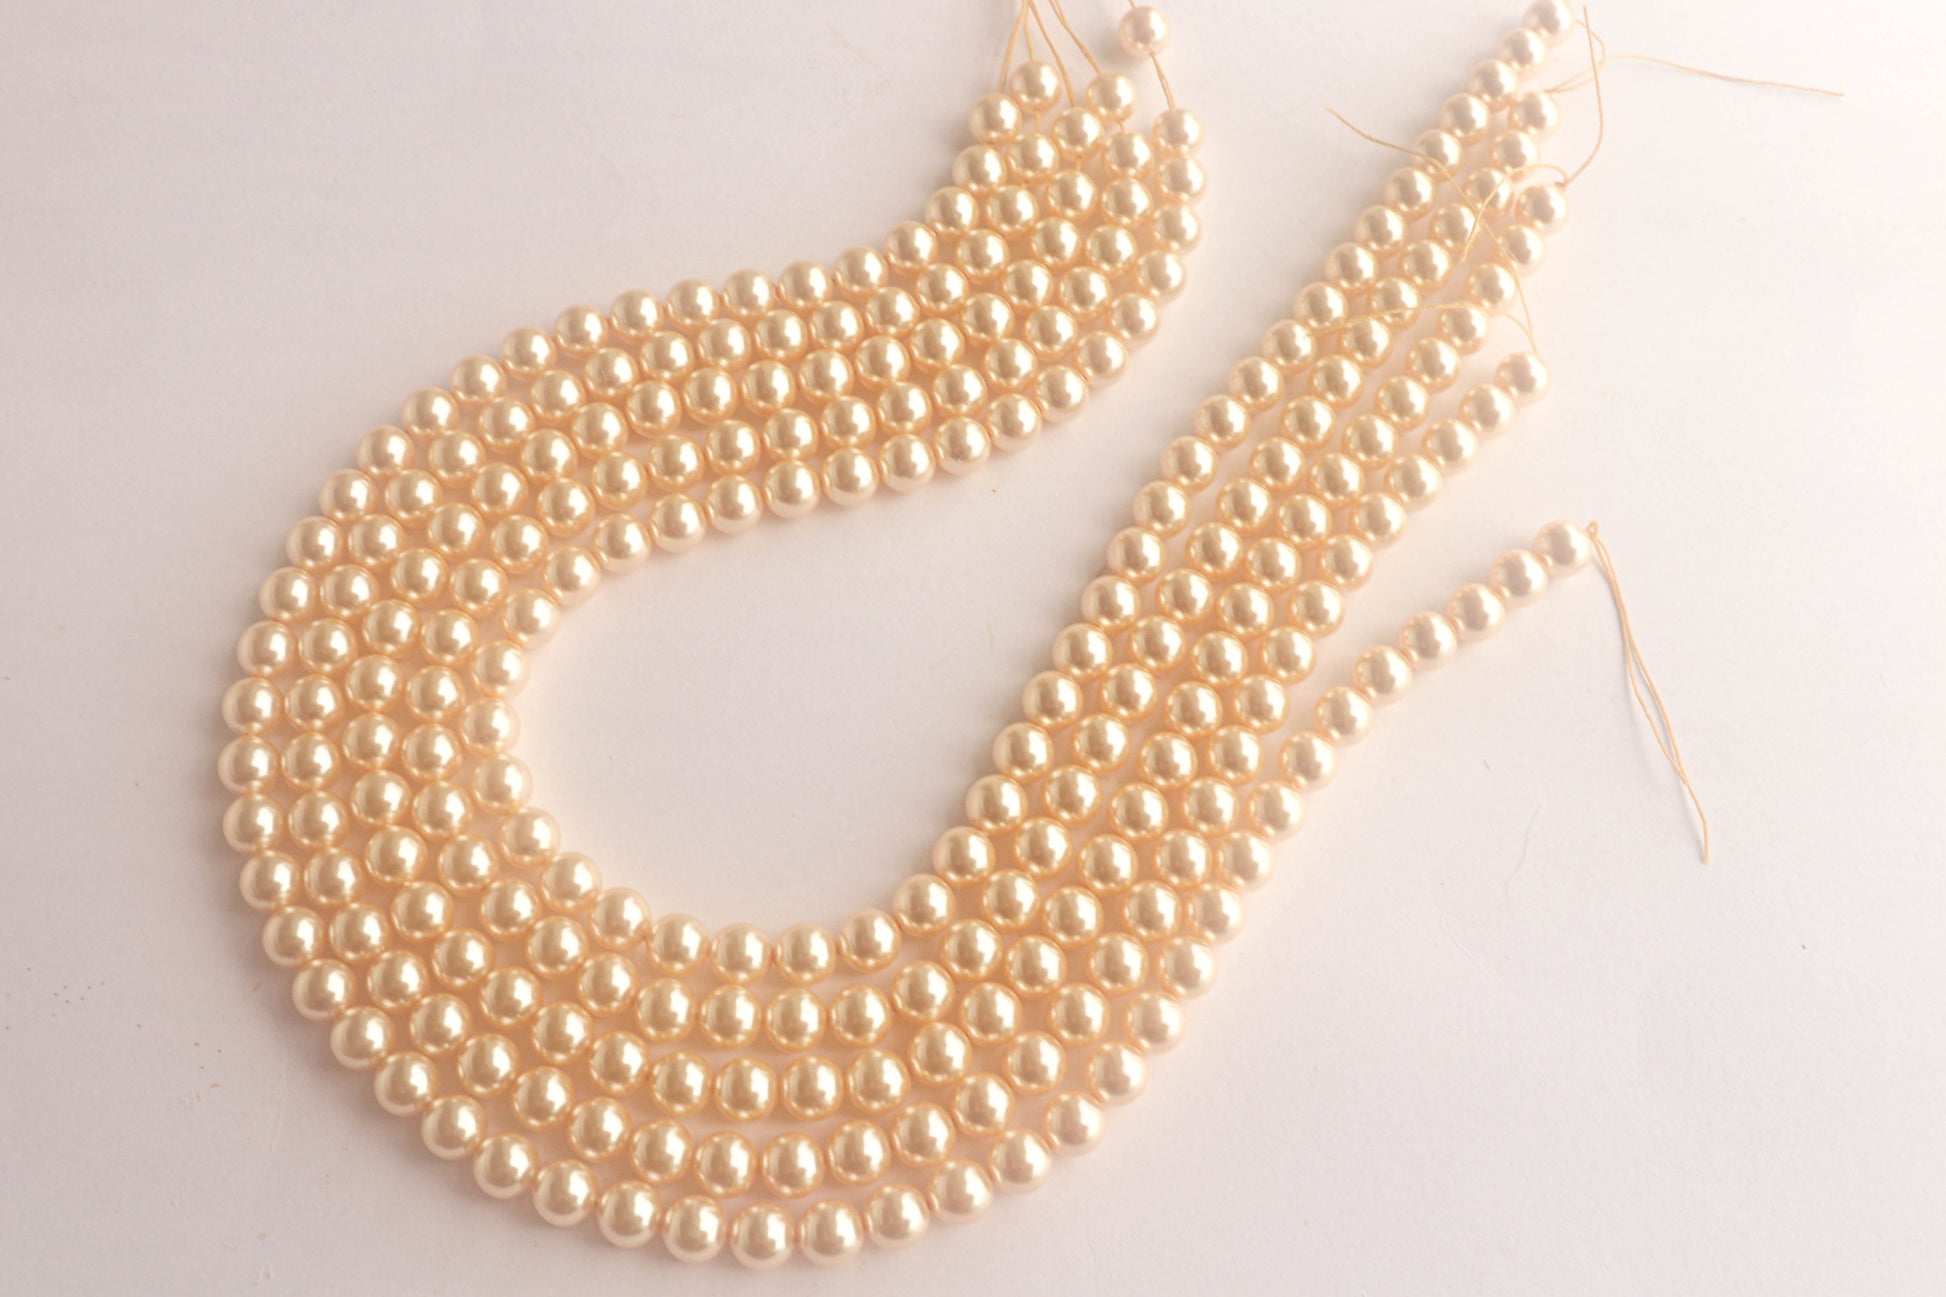 4mm Crystal Light Gold (001 539) Genuine Swarovski 5810 Pearls Round Beads Beadsforyourjewelry